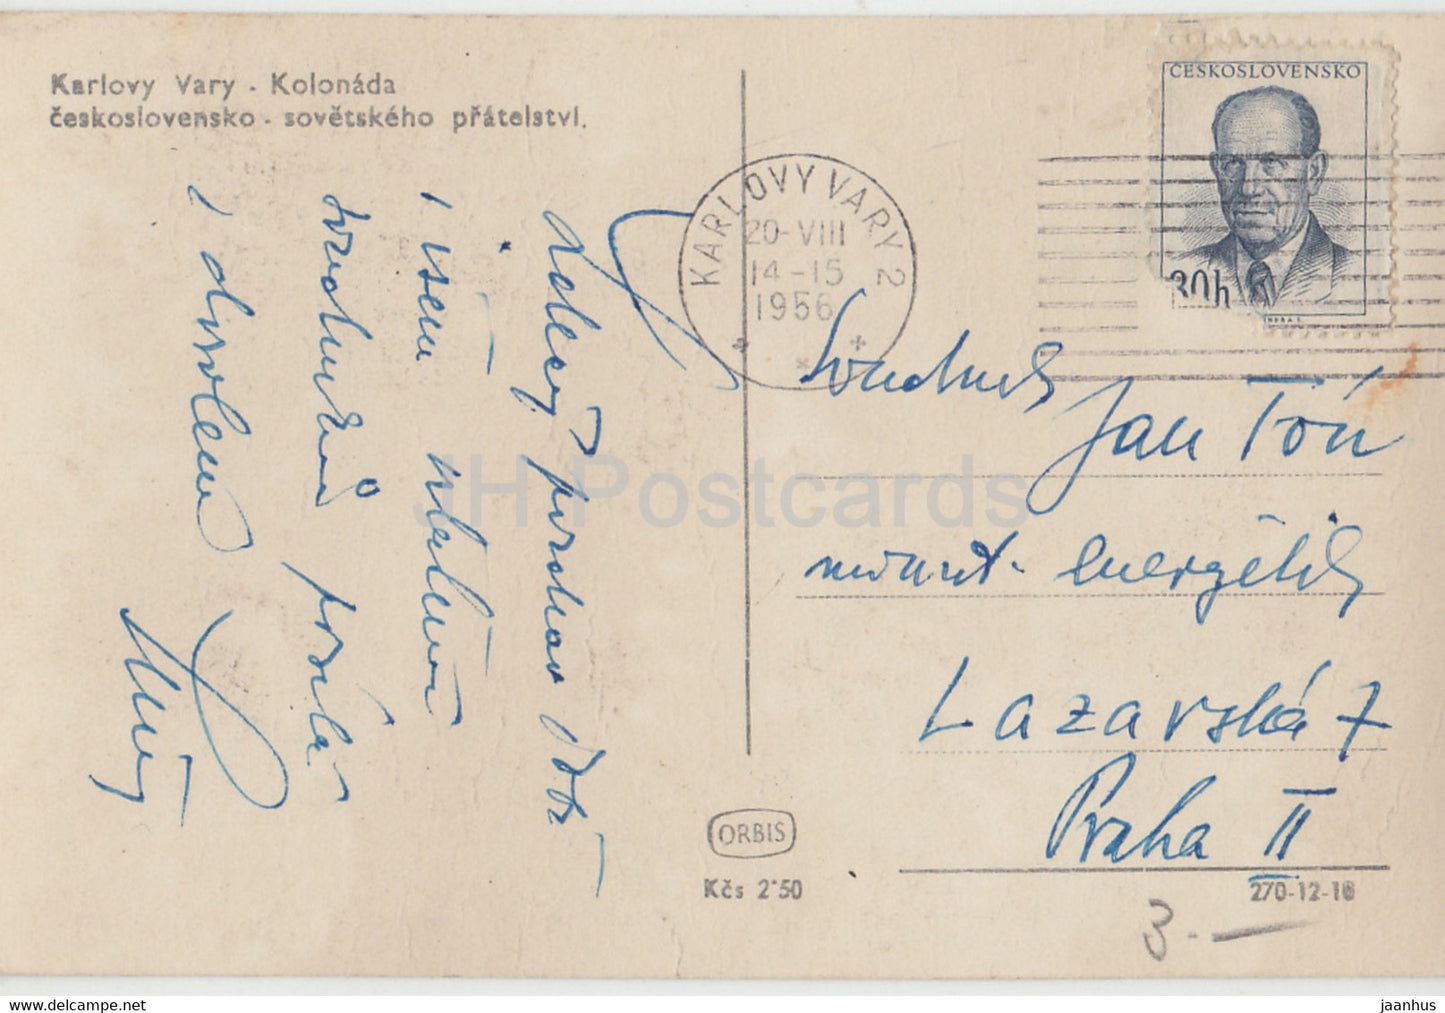 Karlovy Vary - Karlsbad - kolonada - Colonnade - 593 - old postcard - 1956 - Czechoslovakia - Czech Republic - unused